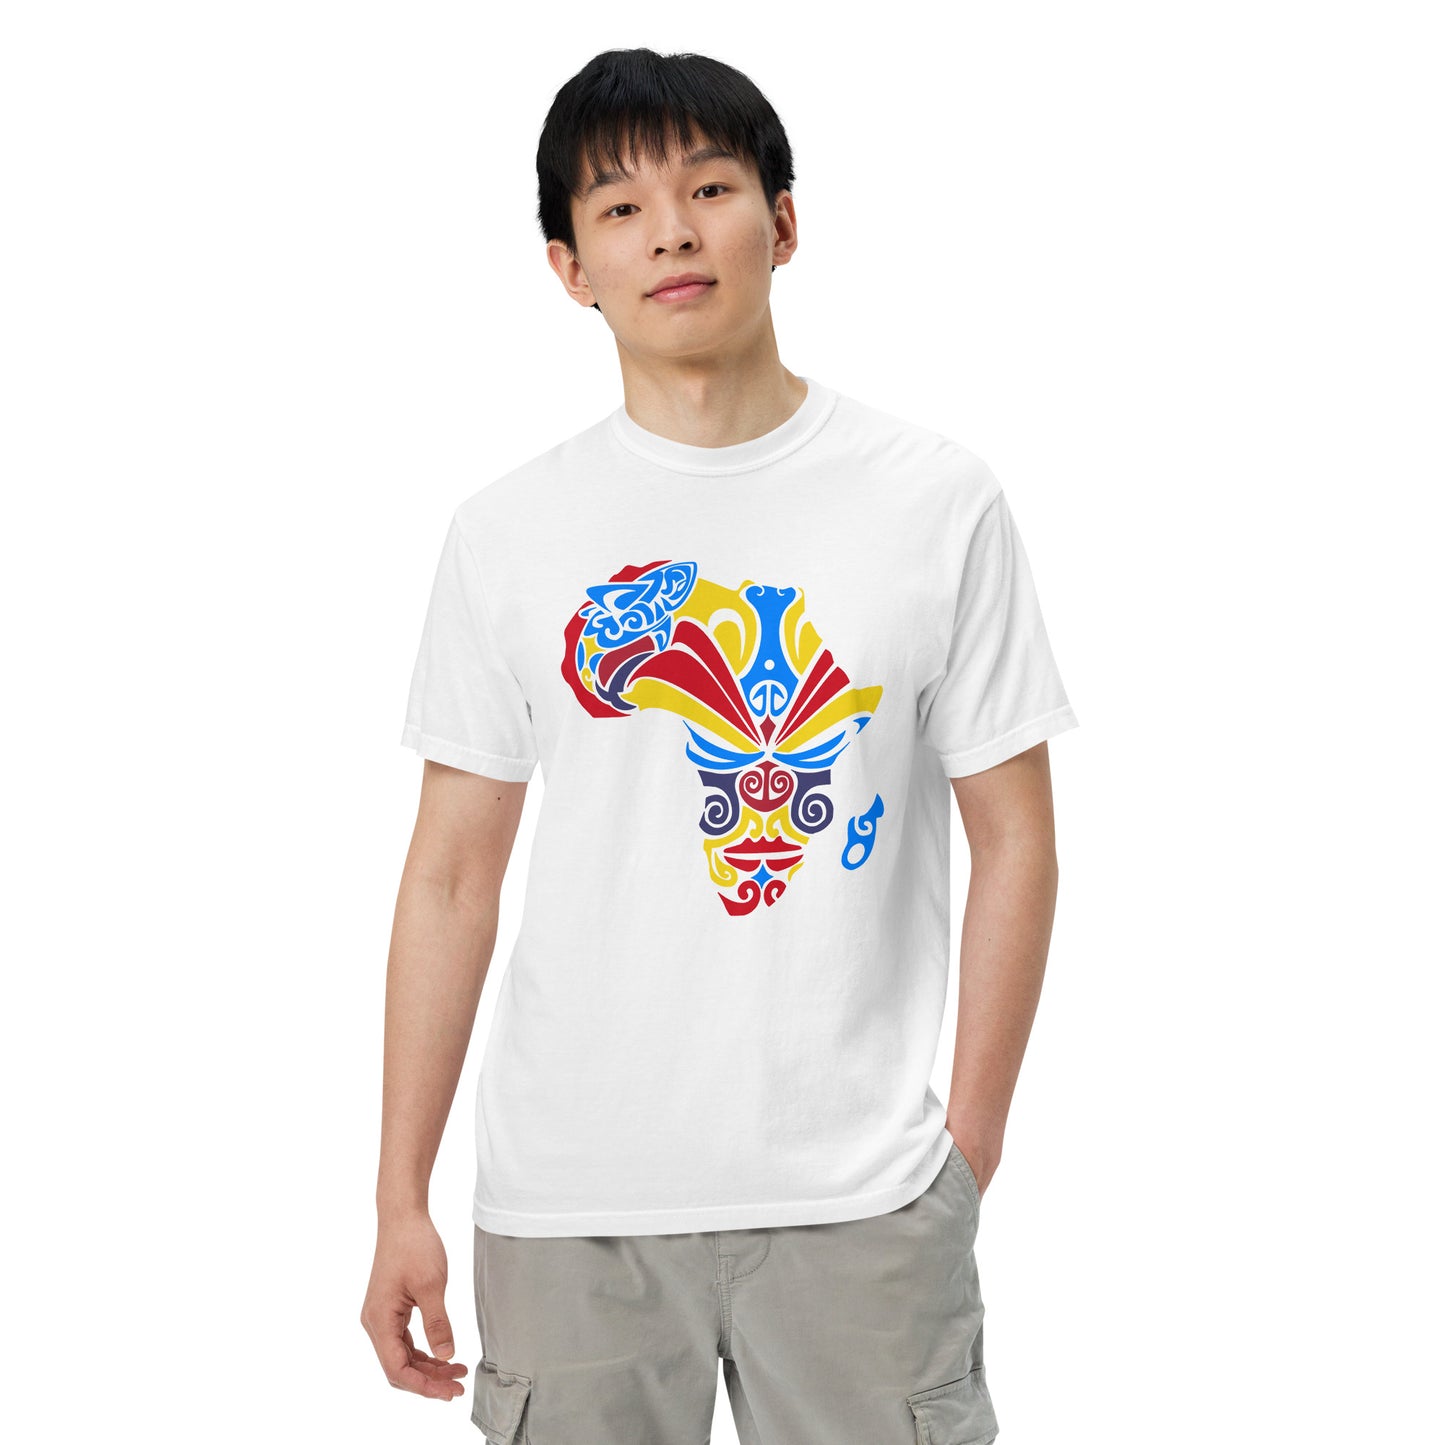 Men’s Garment-Dyed Heavyweight T-shirt - Banamerica Collection